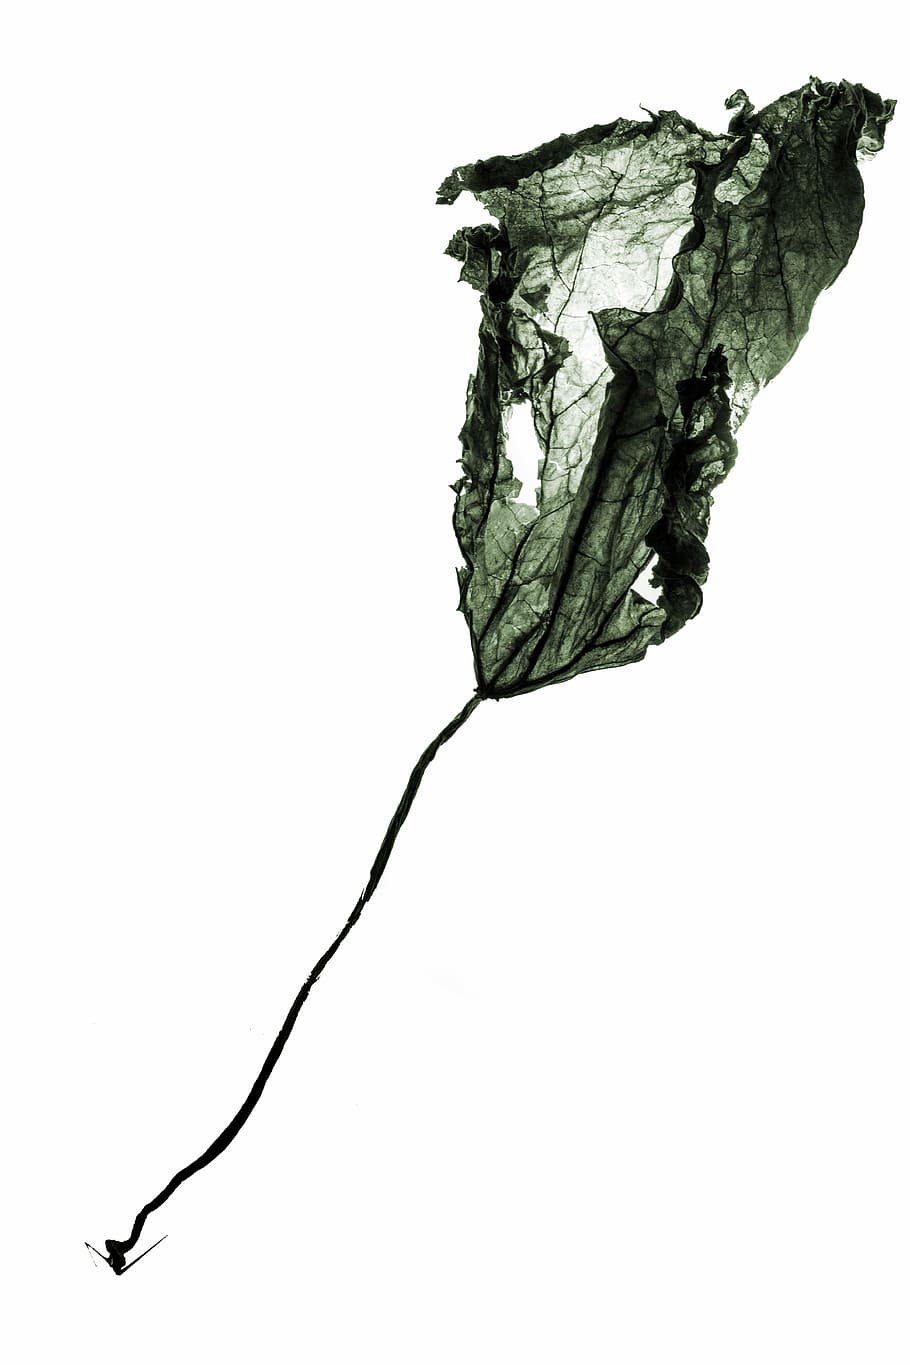 Plant, Still Life, Leaves, the leaves, silhouette, white background, cut out, studio shot, rose - flower, flower